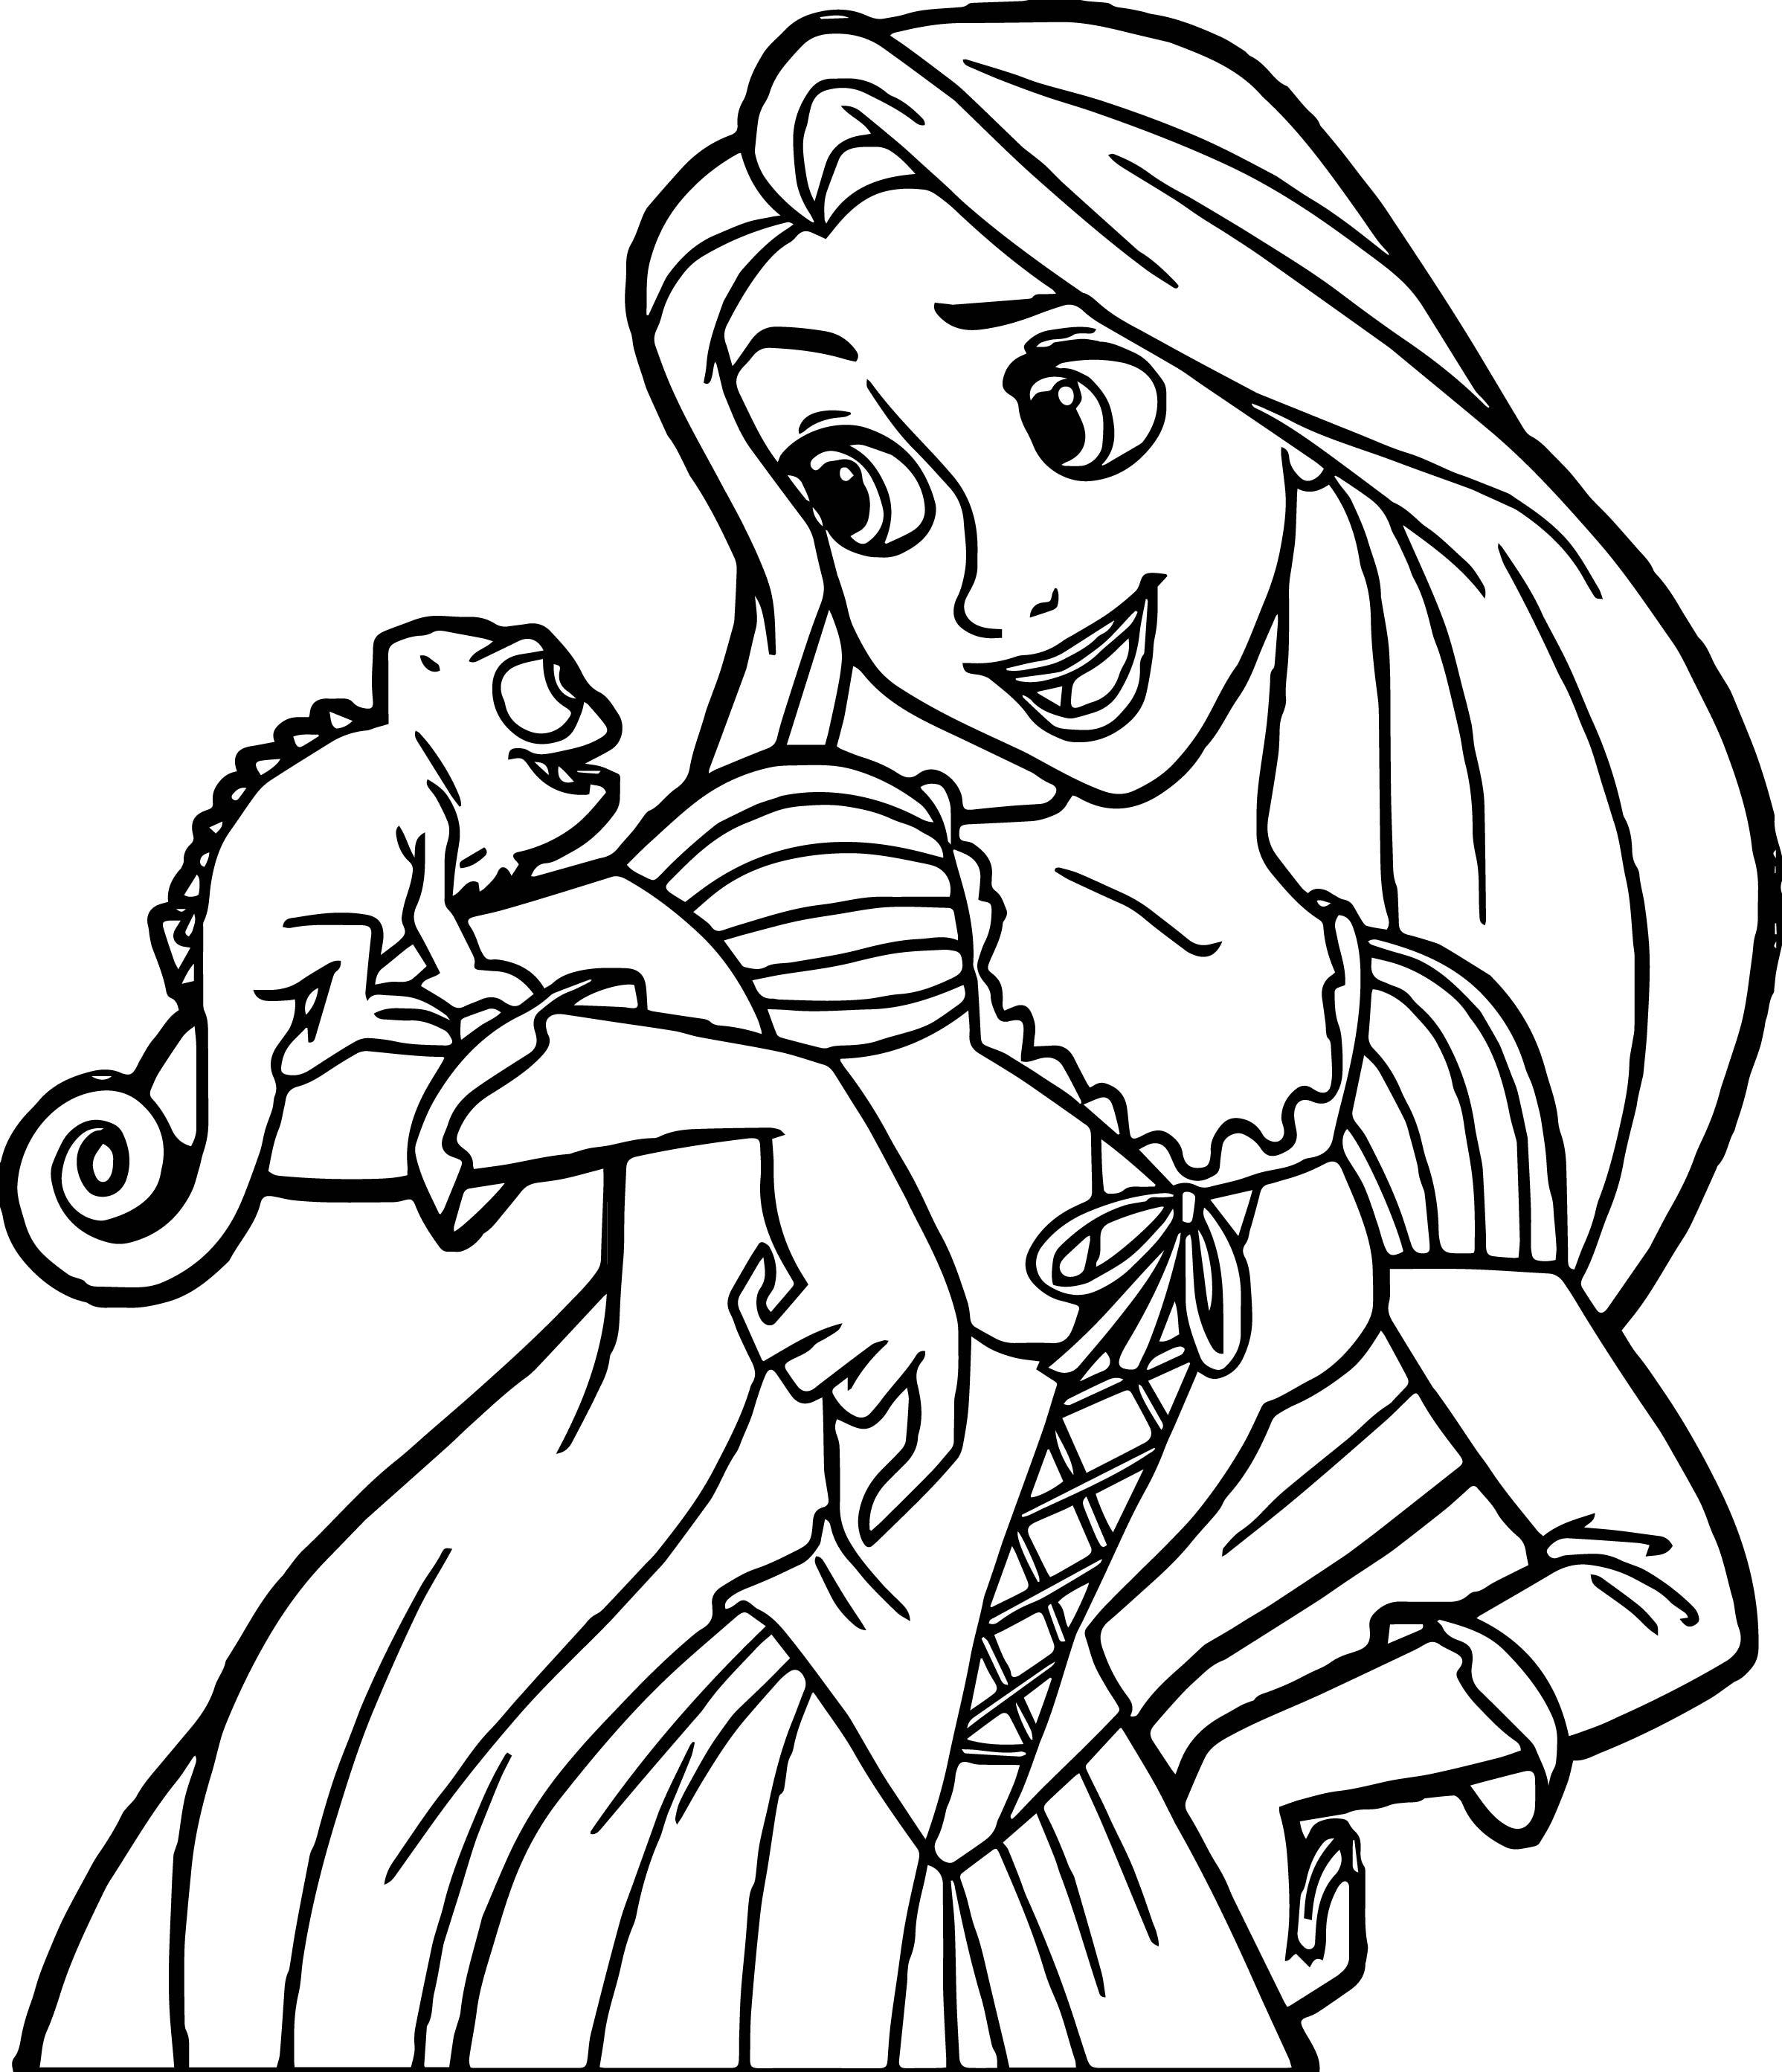 Disney Princess Rapunzel Coloring Pages Coloring Pages for Kids